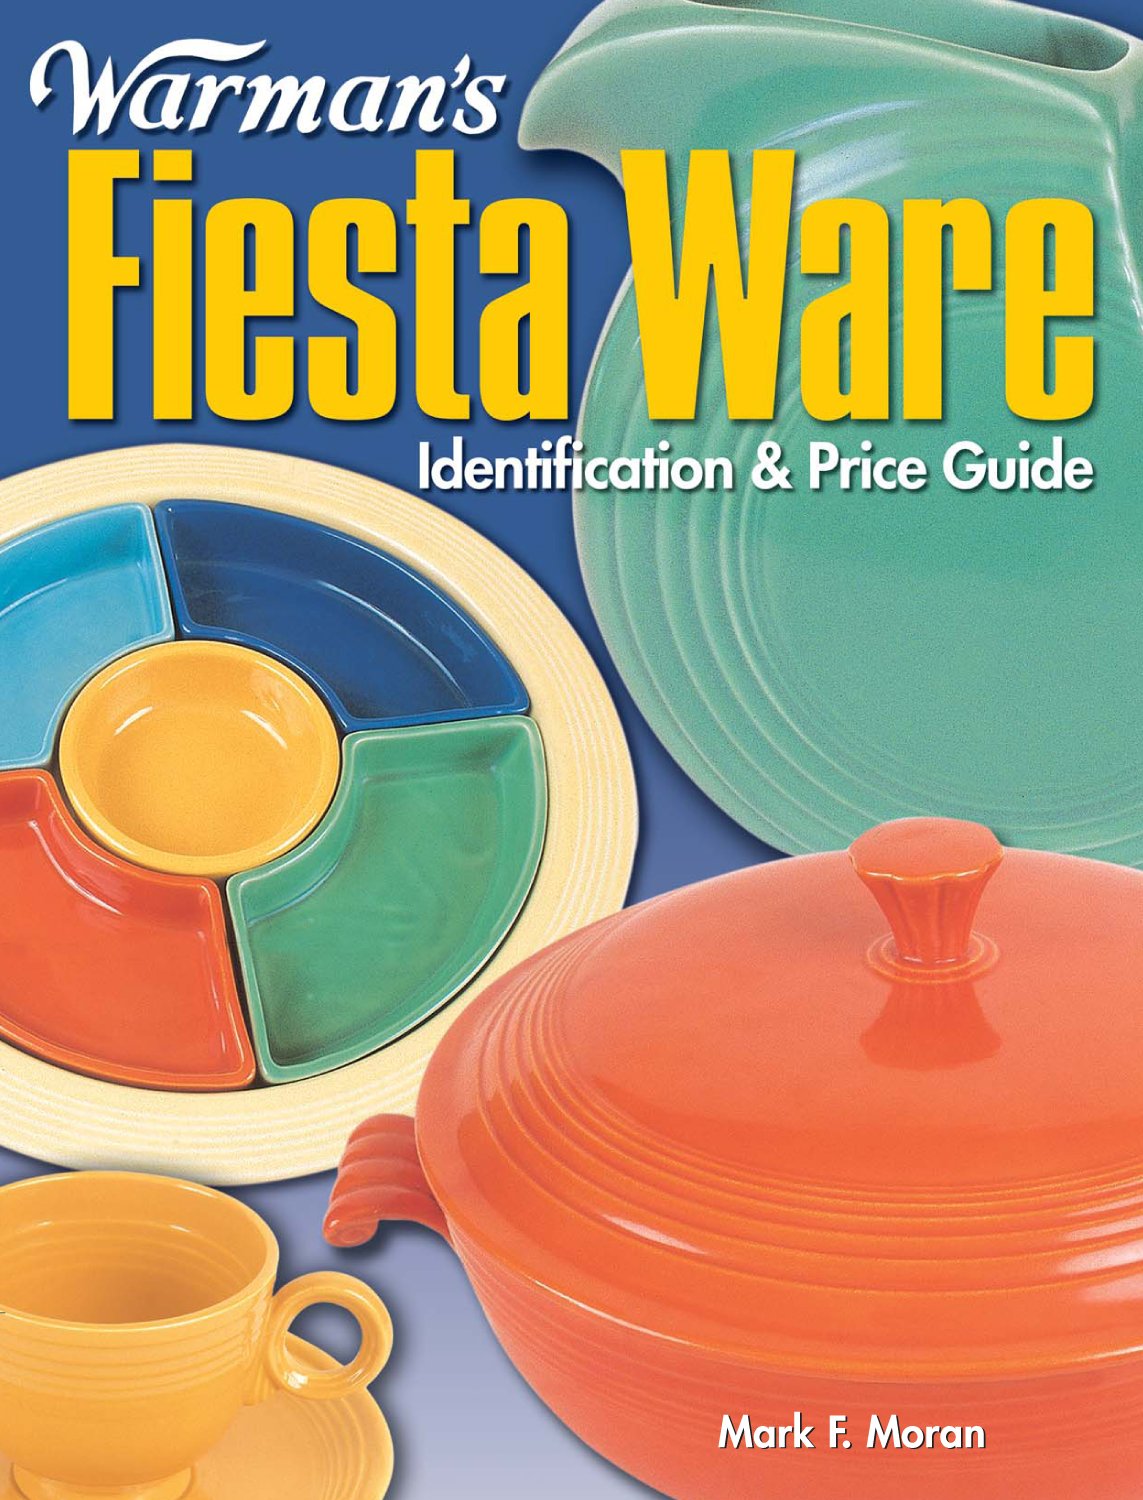 Warman's Fiesta Ware: Identification & Price Guide